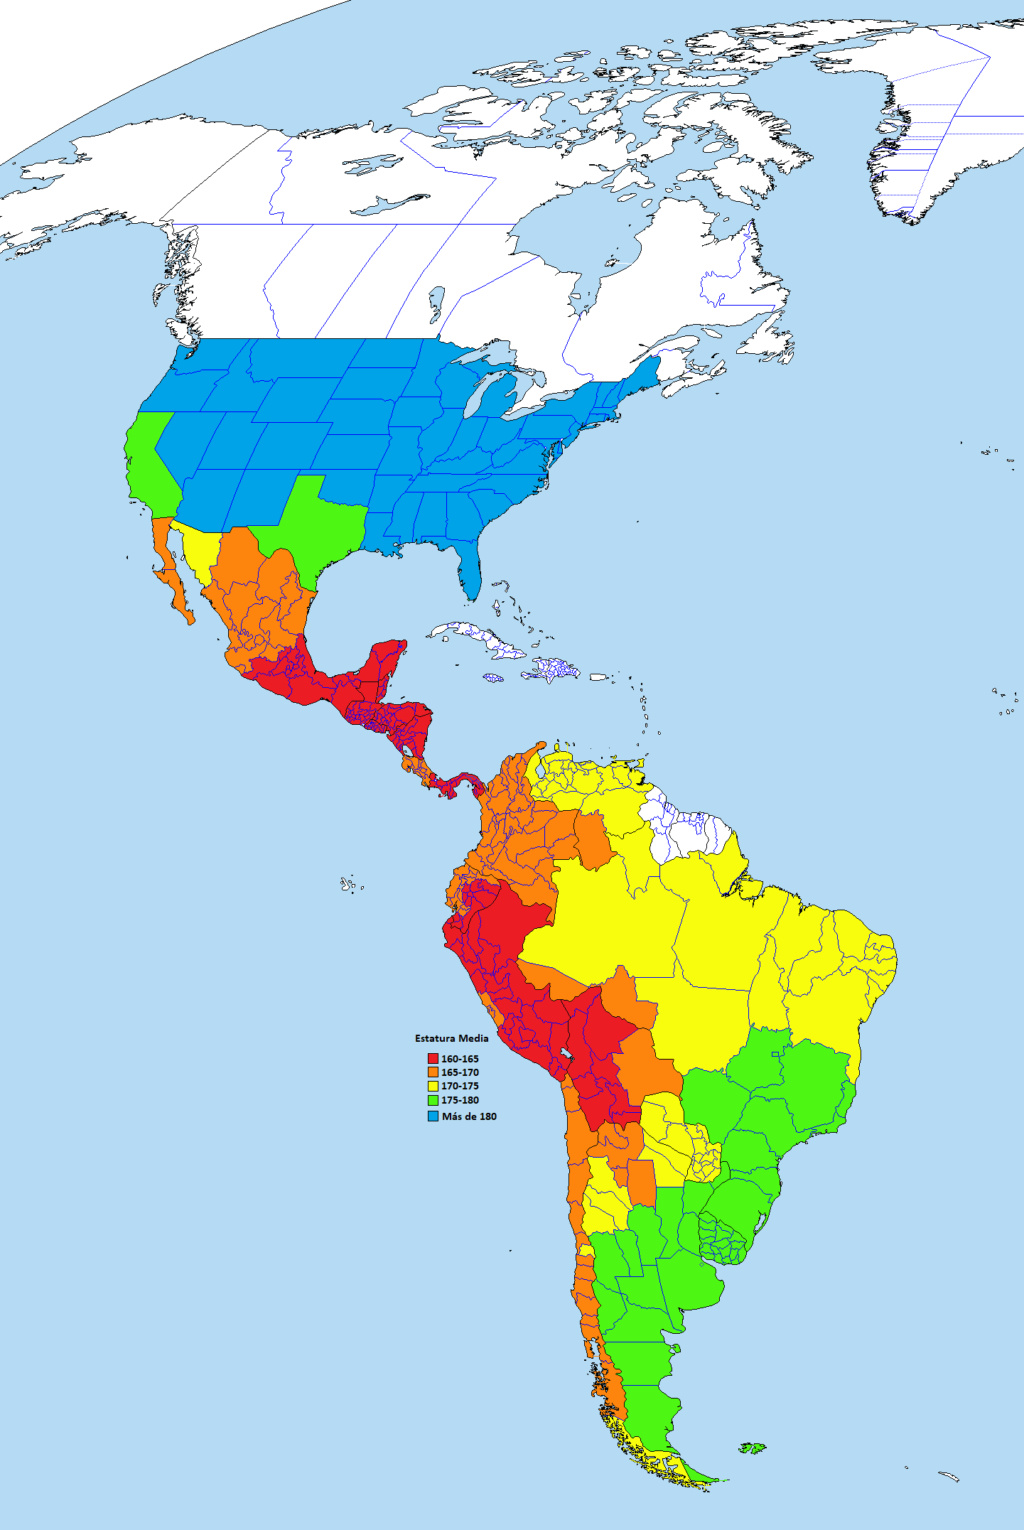 Diferentes fenotipos y grupos étnicos de Latinoamérica - Página 33 Mapa_e10